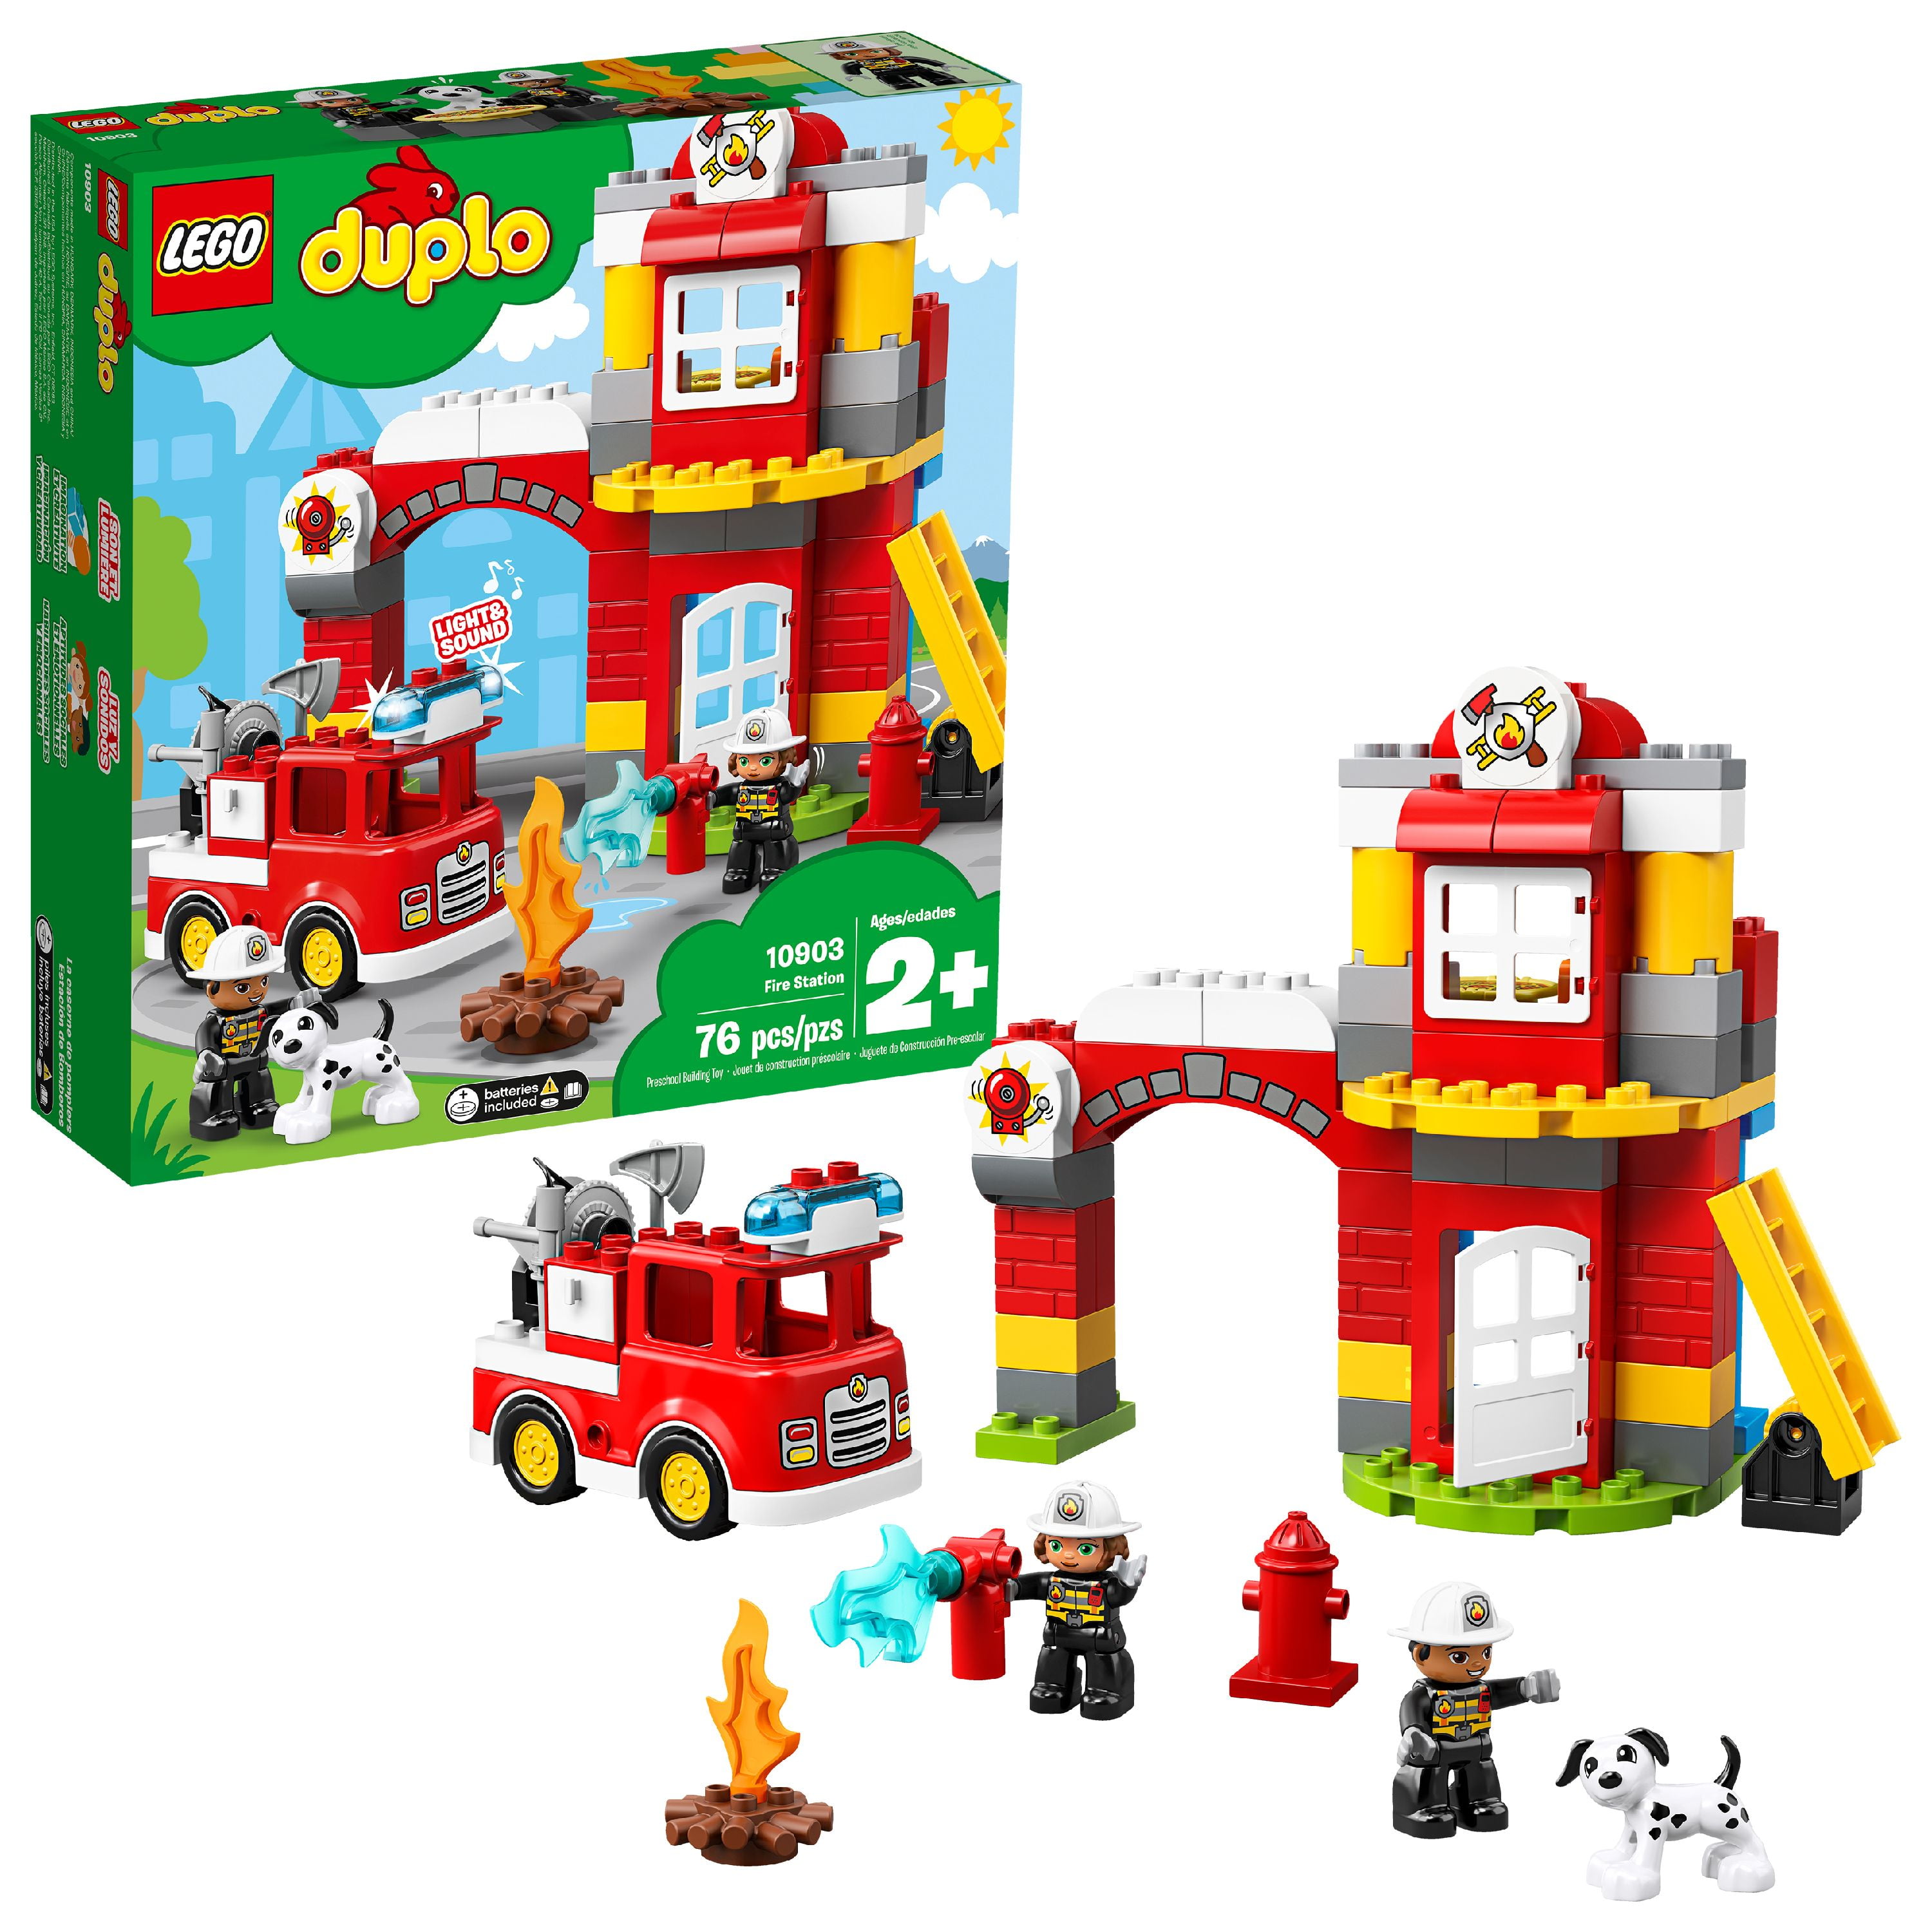 Lego Firefighter Fireman w/ Accessory Random Town City Minifigures Lot of 5